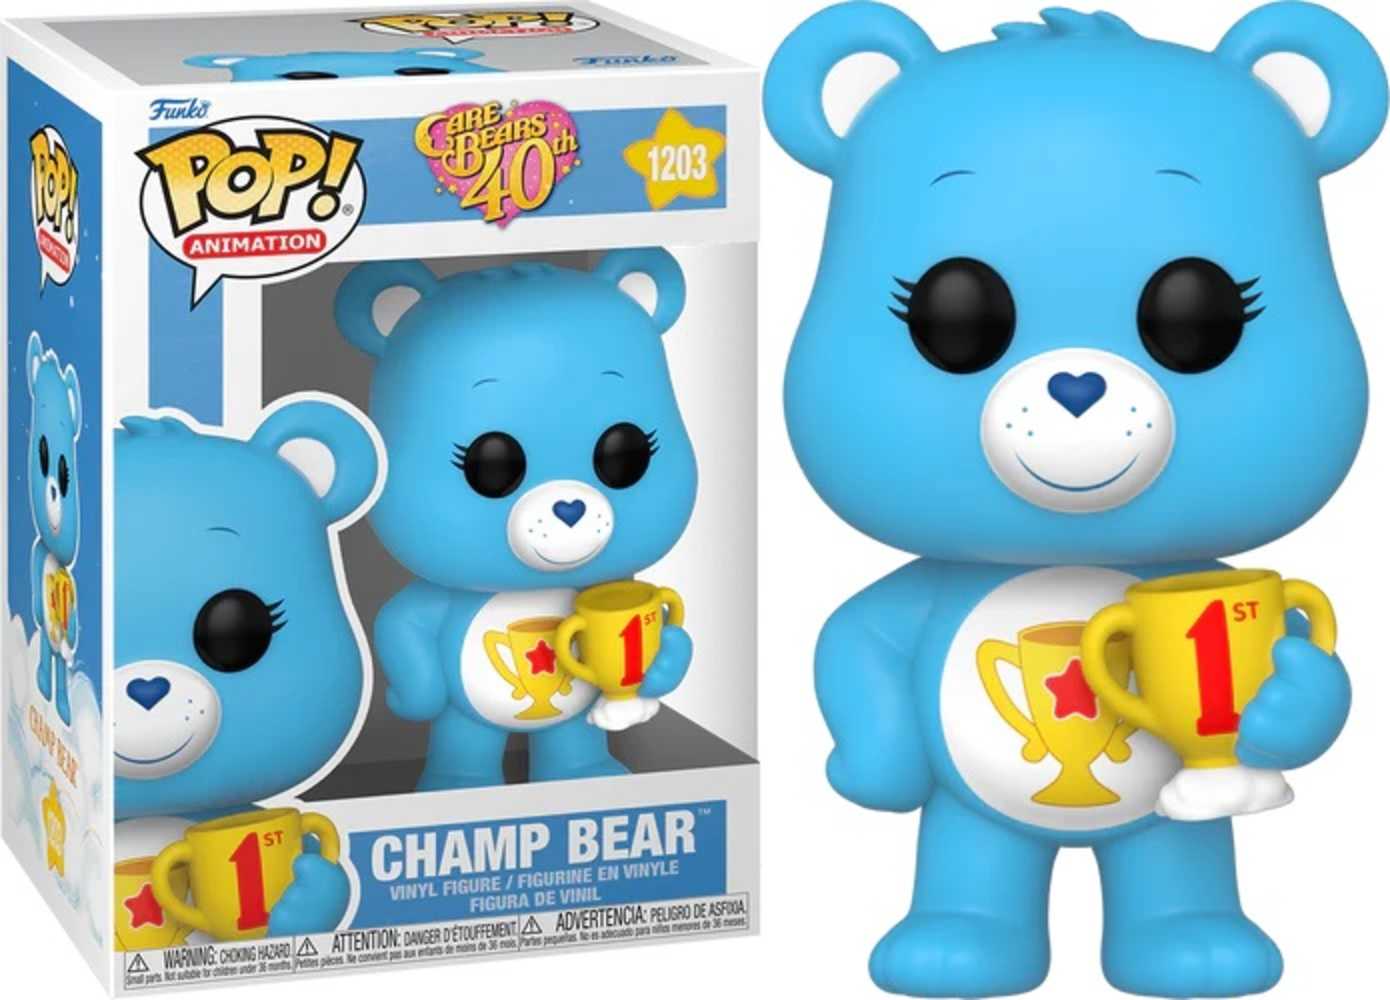 Pop Animation Care Bears 40th Champ Bear Vinyl Figure